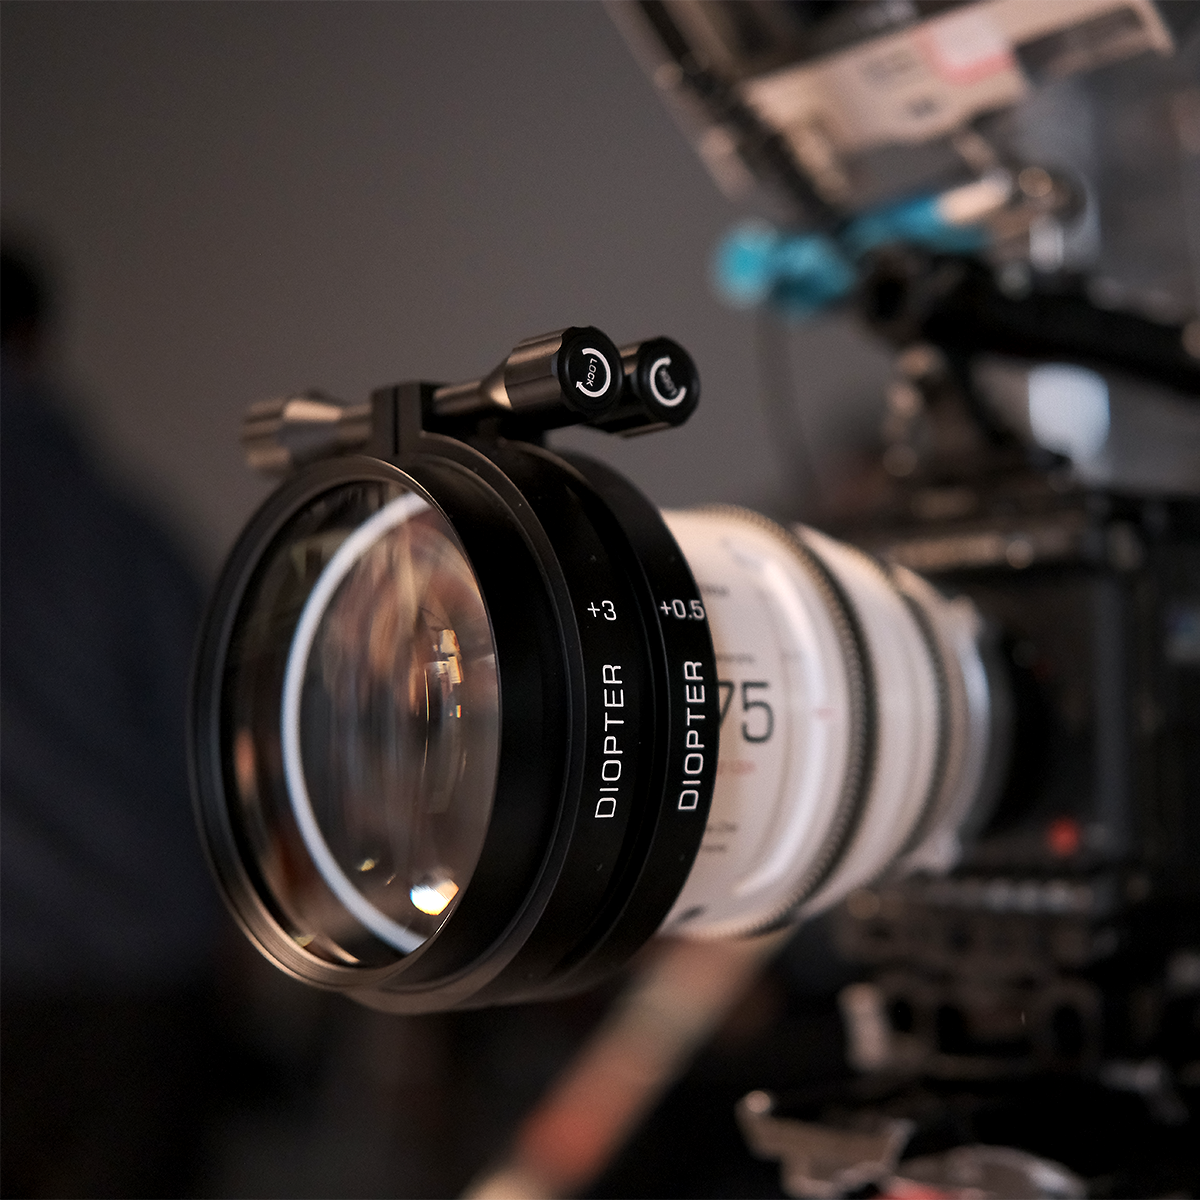 Viltrox ZMOVE Series Cine Lens Diopters Set